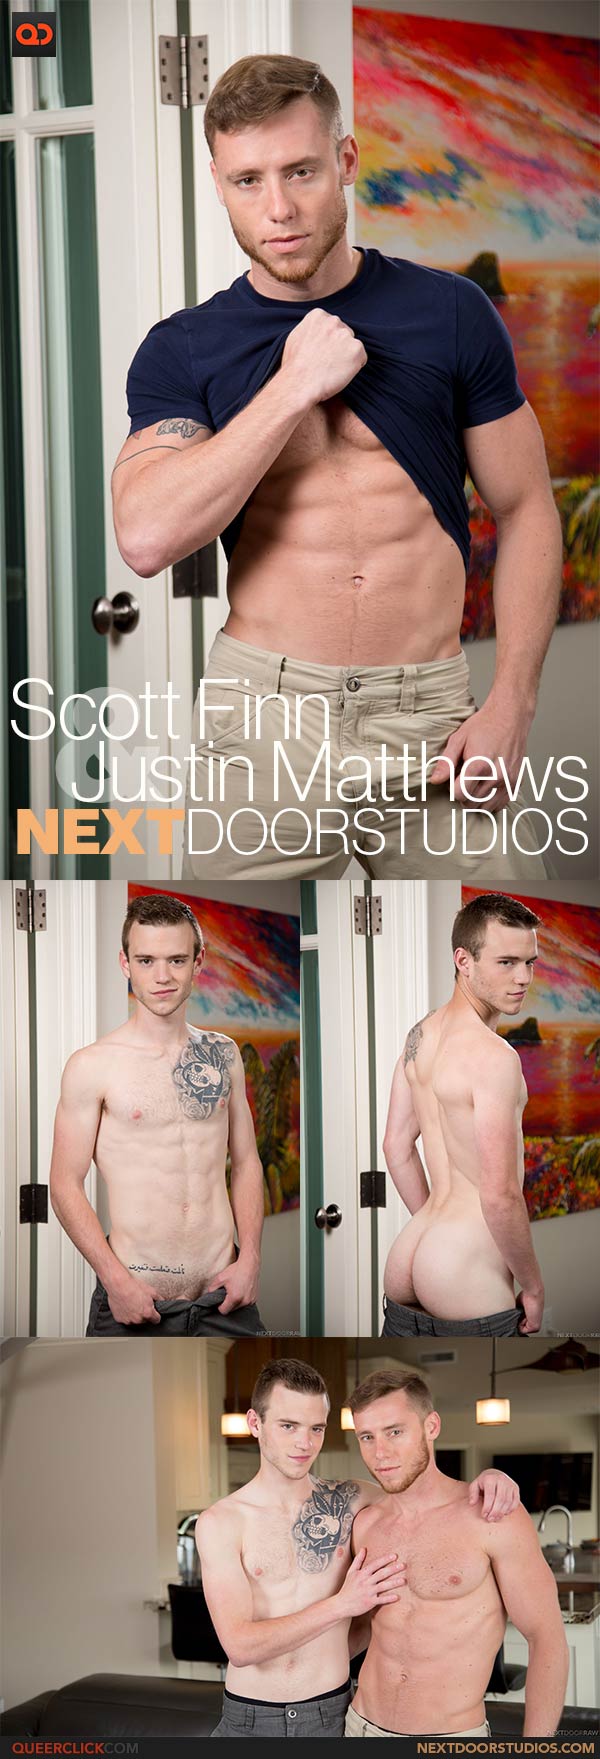 Next Door Studios: Scott Finn and Justin Matthews